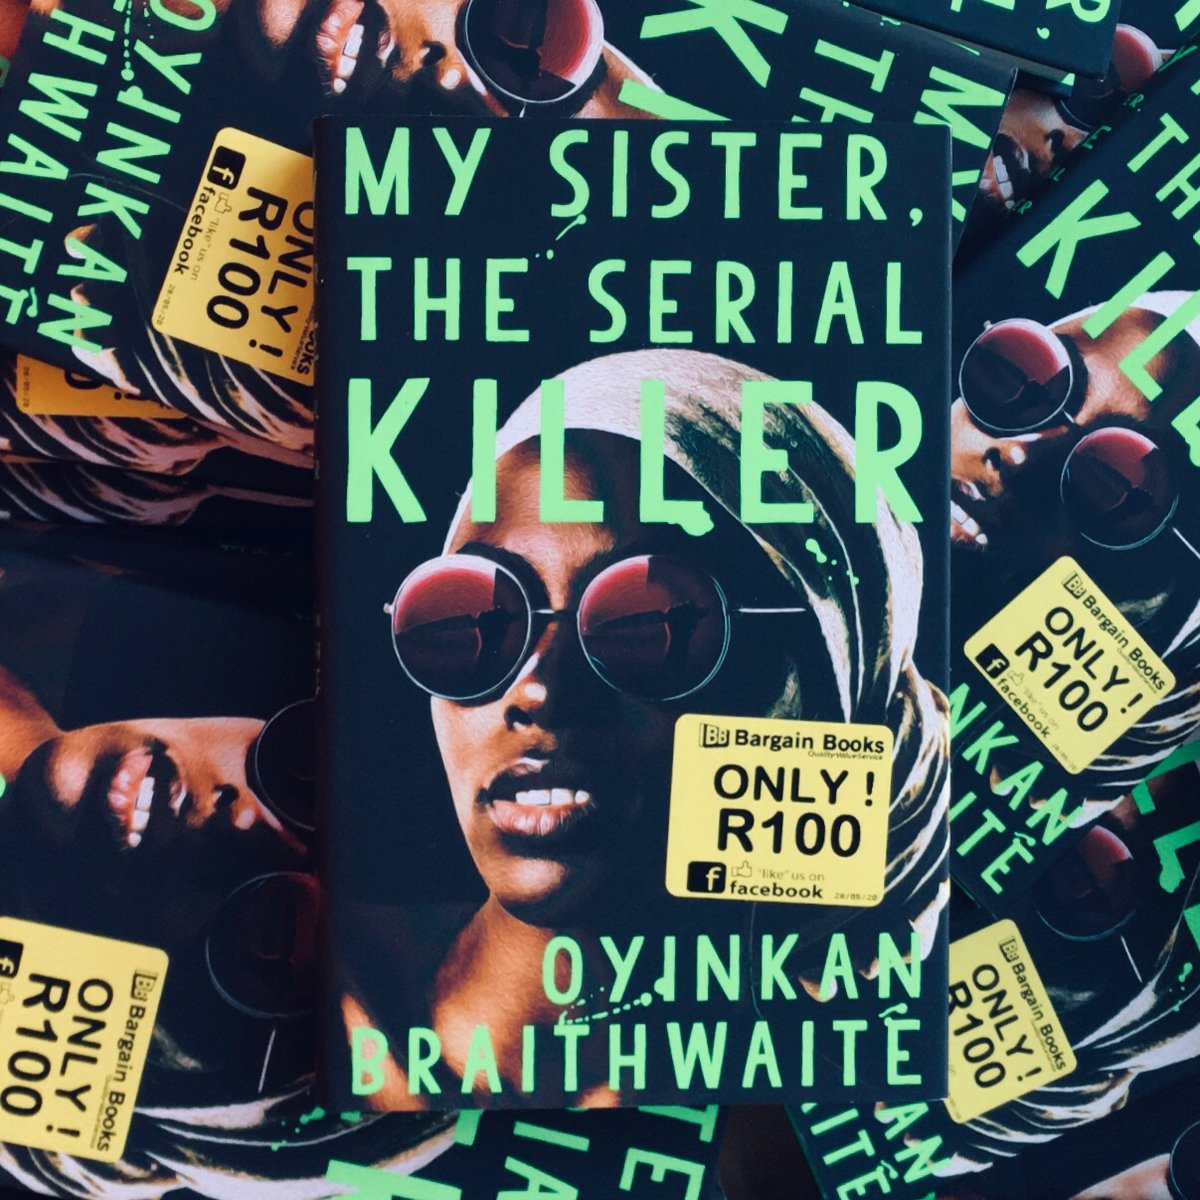 #MySistertheSerialKiller by Oyinkan Braithwaite is available in selected Bargain Books stores for R100, while stocks last!